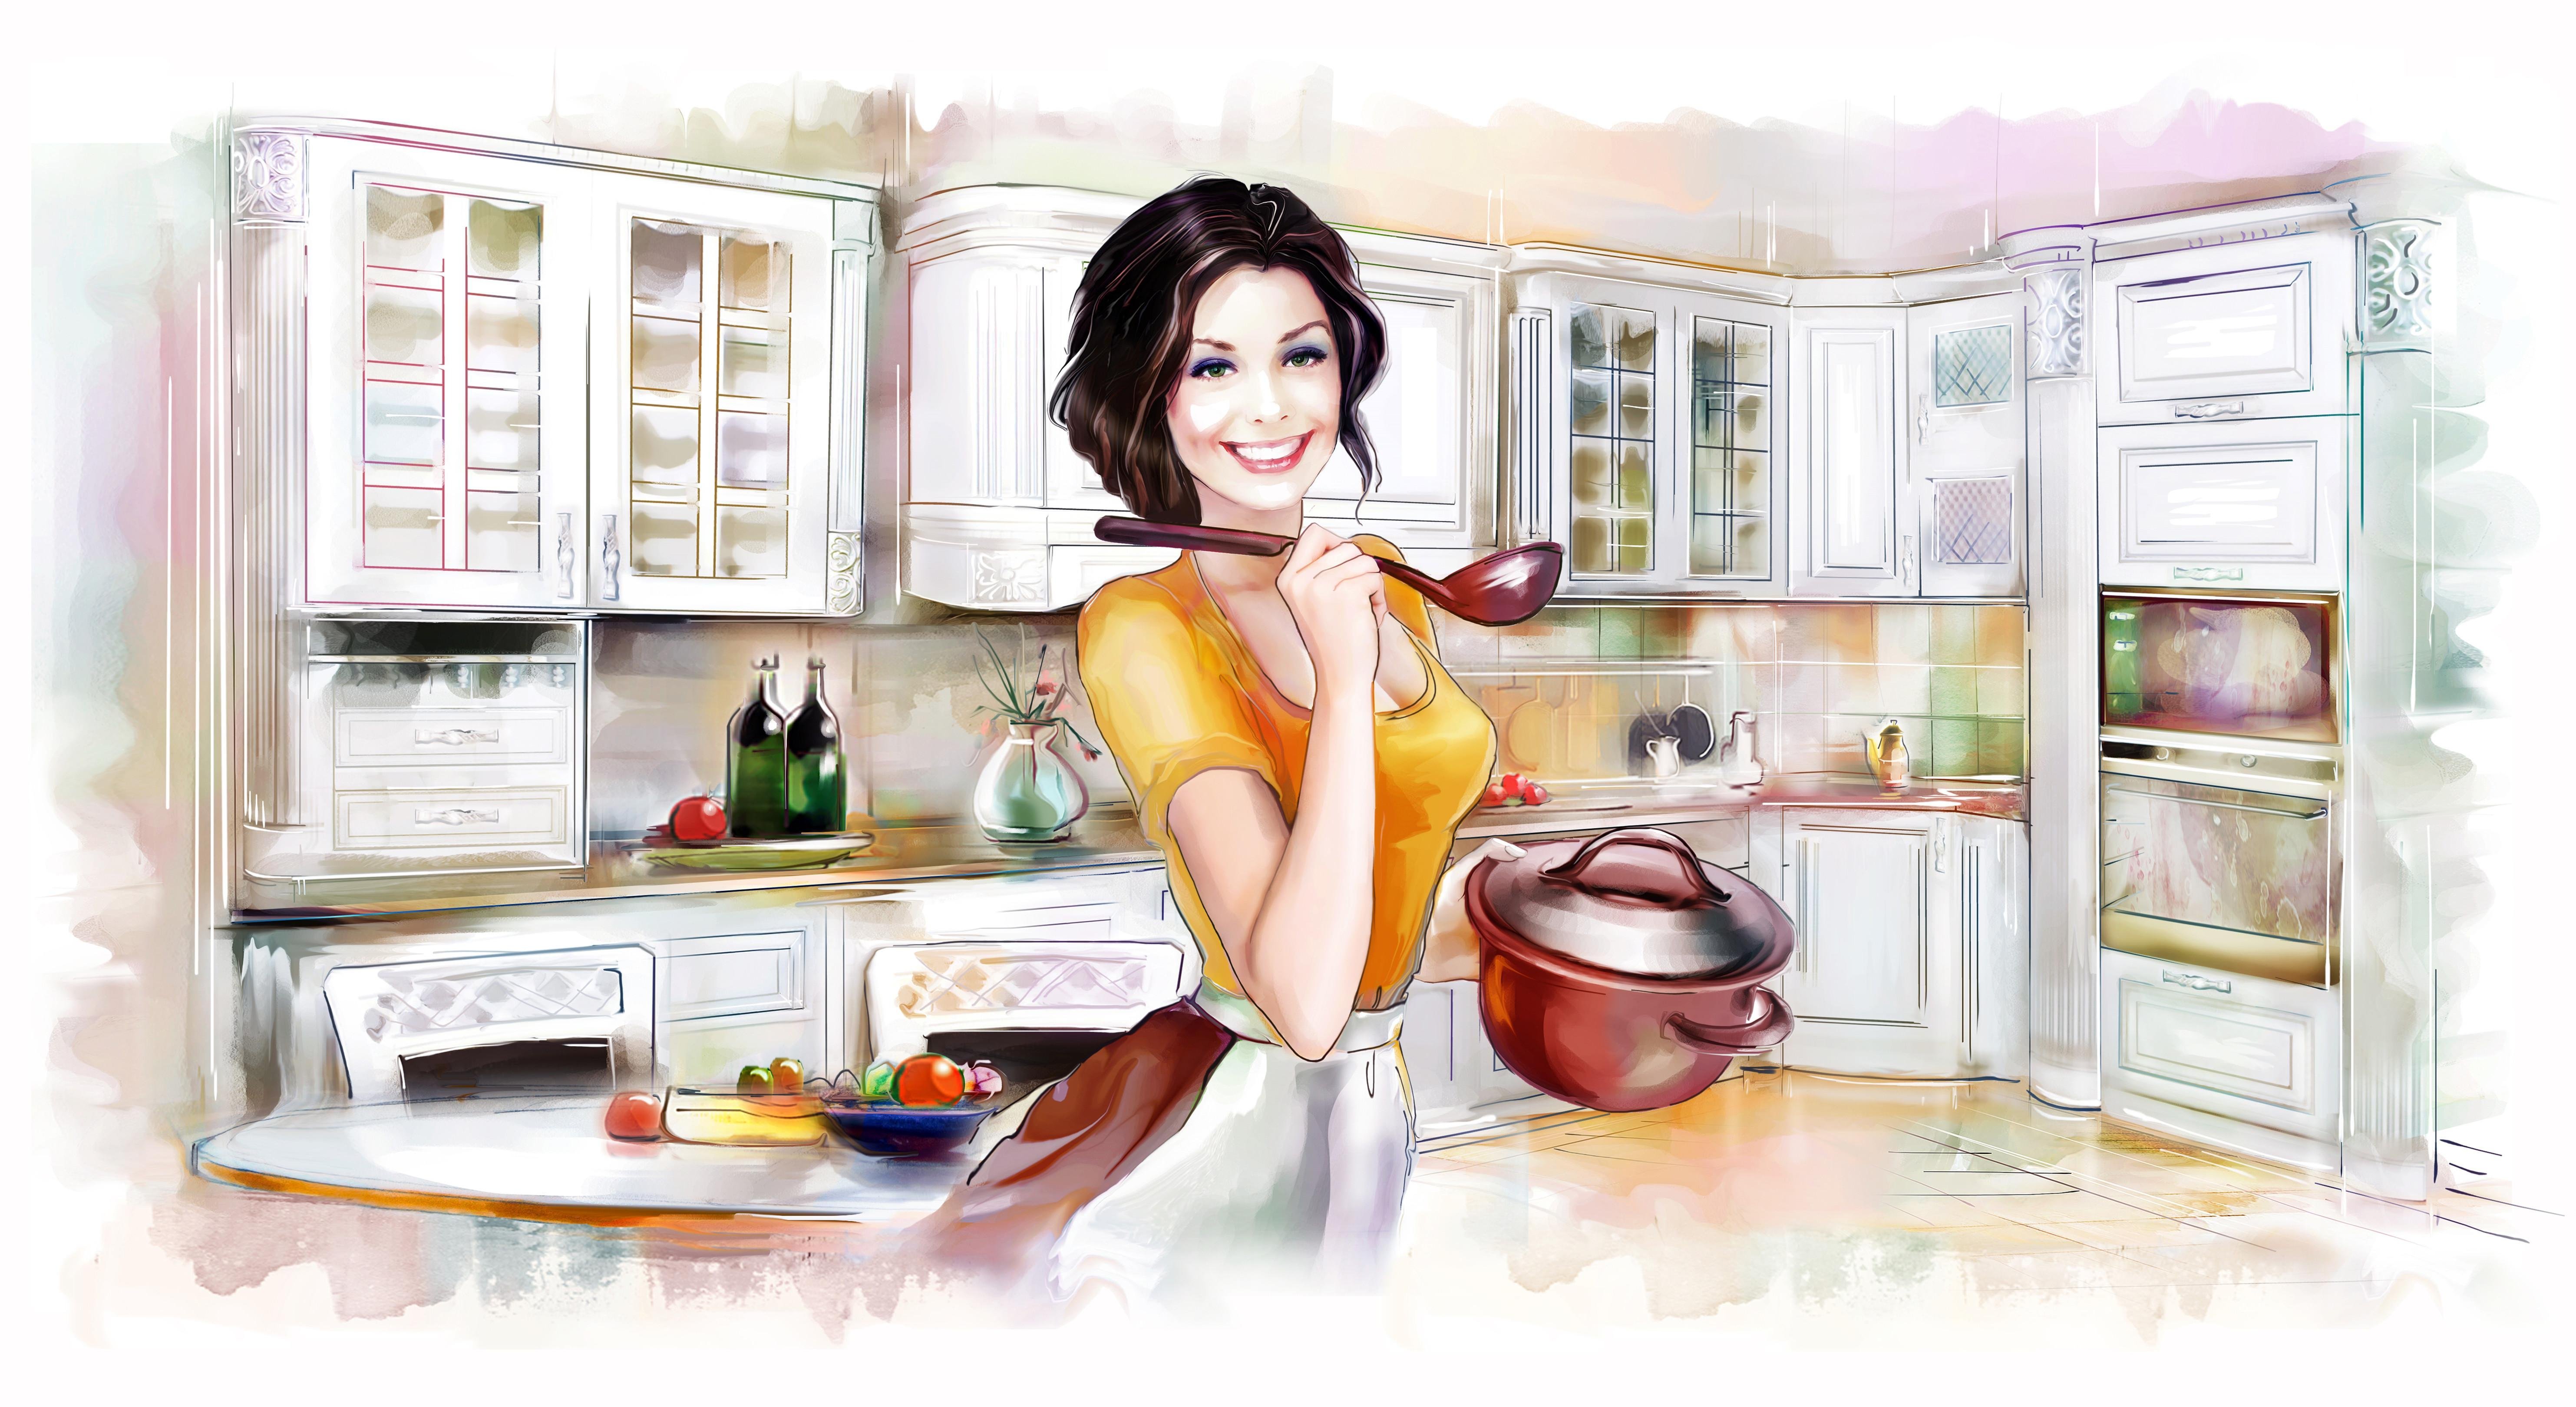 Послушного ласкового. Хозяюшка на кухне иллюстрация. Женщина на кухне. Хозяйка на кухне. Женщина хозяйка в доме.